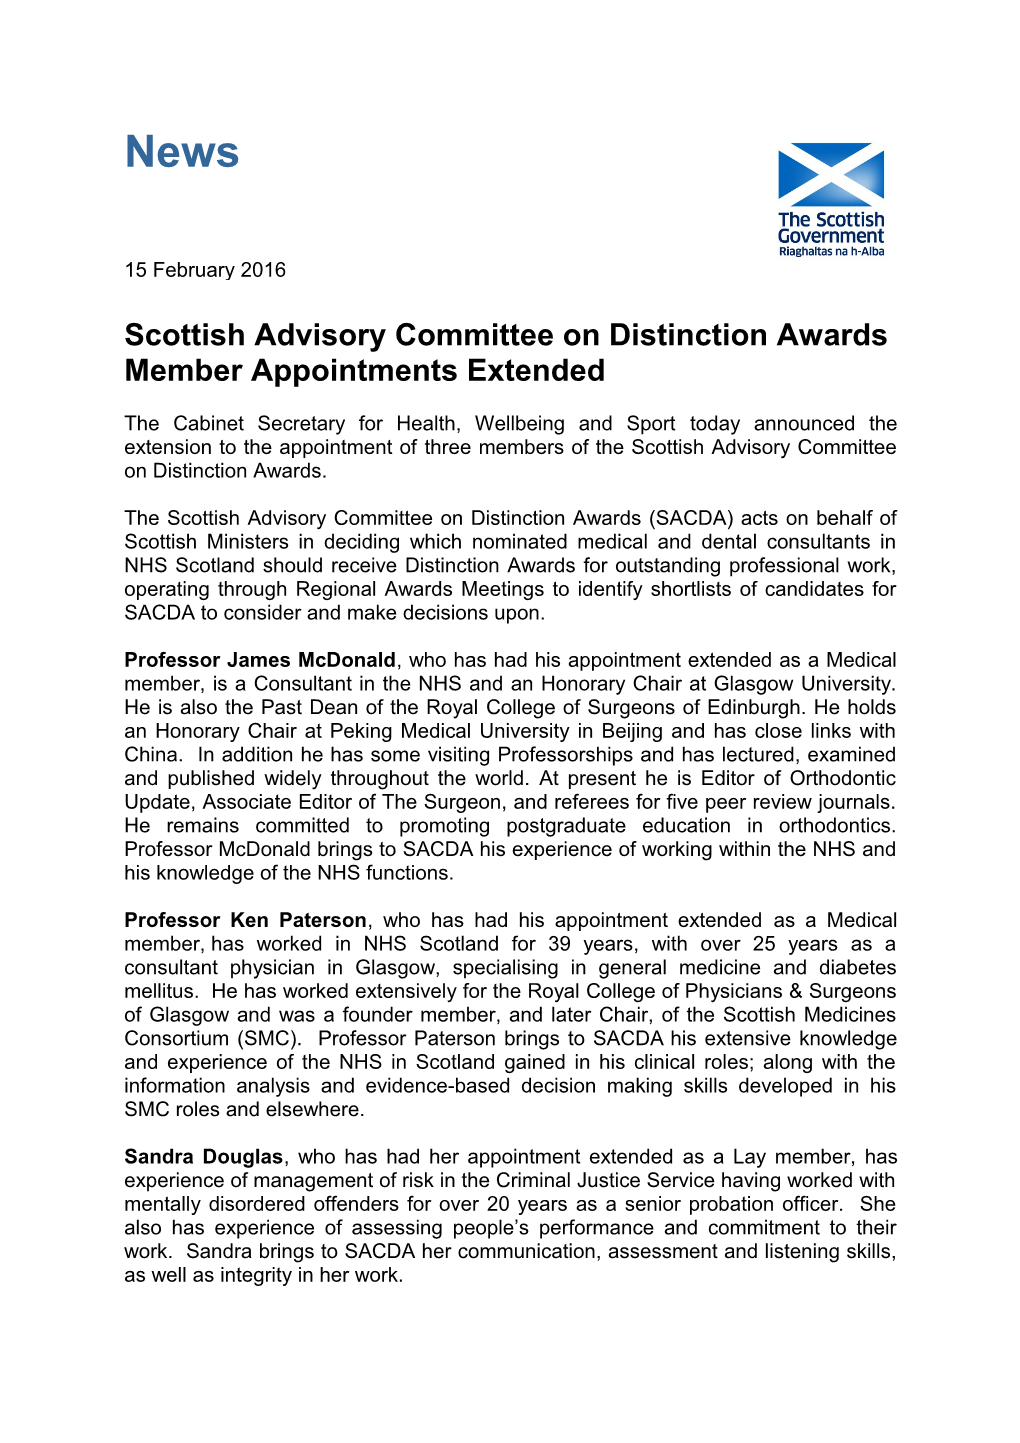 Scottish Advisory Committee on Distinction Awards